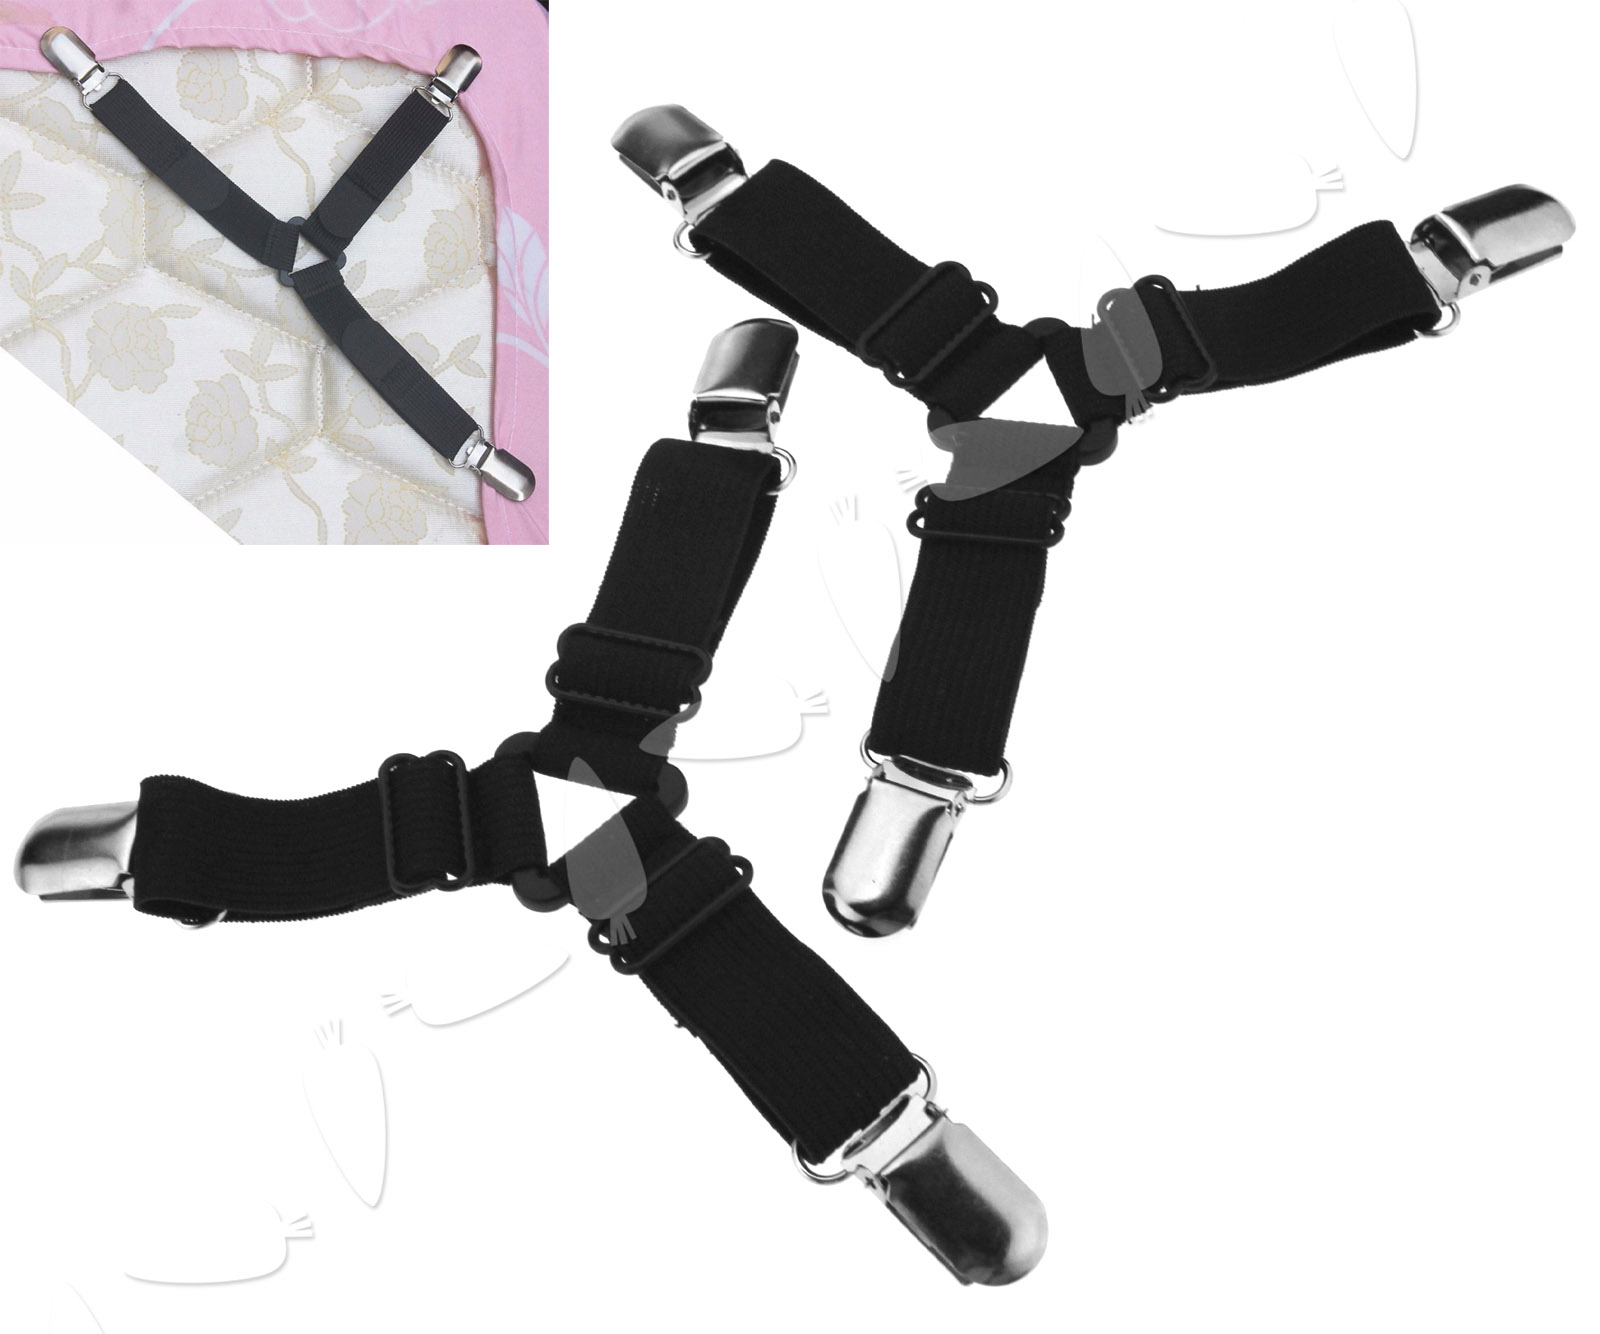 4 x Triangle Suspender Holder Bed Mattress Sheet Straps Clips Grippers ...